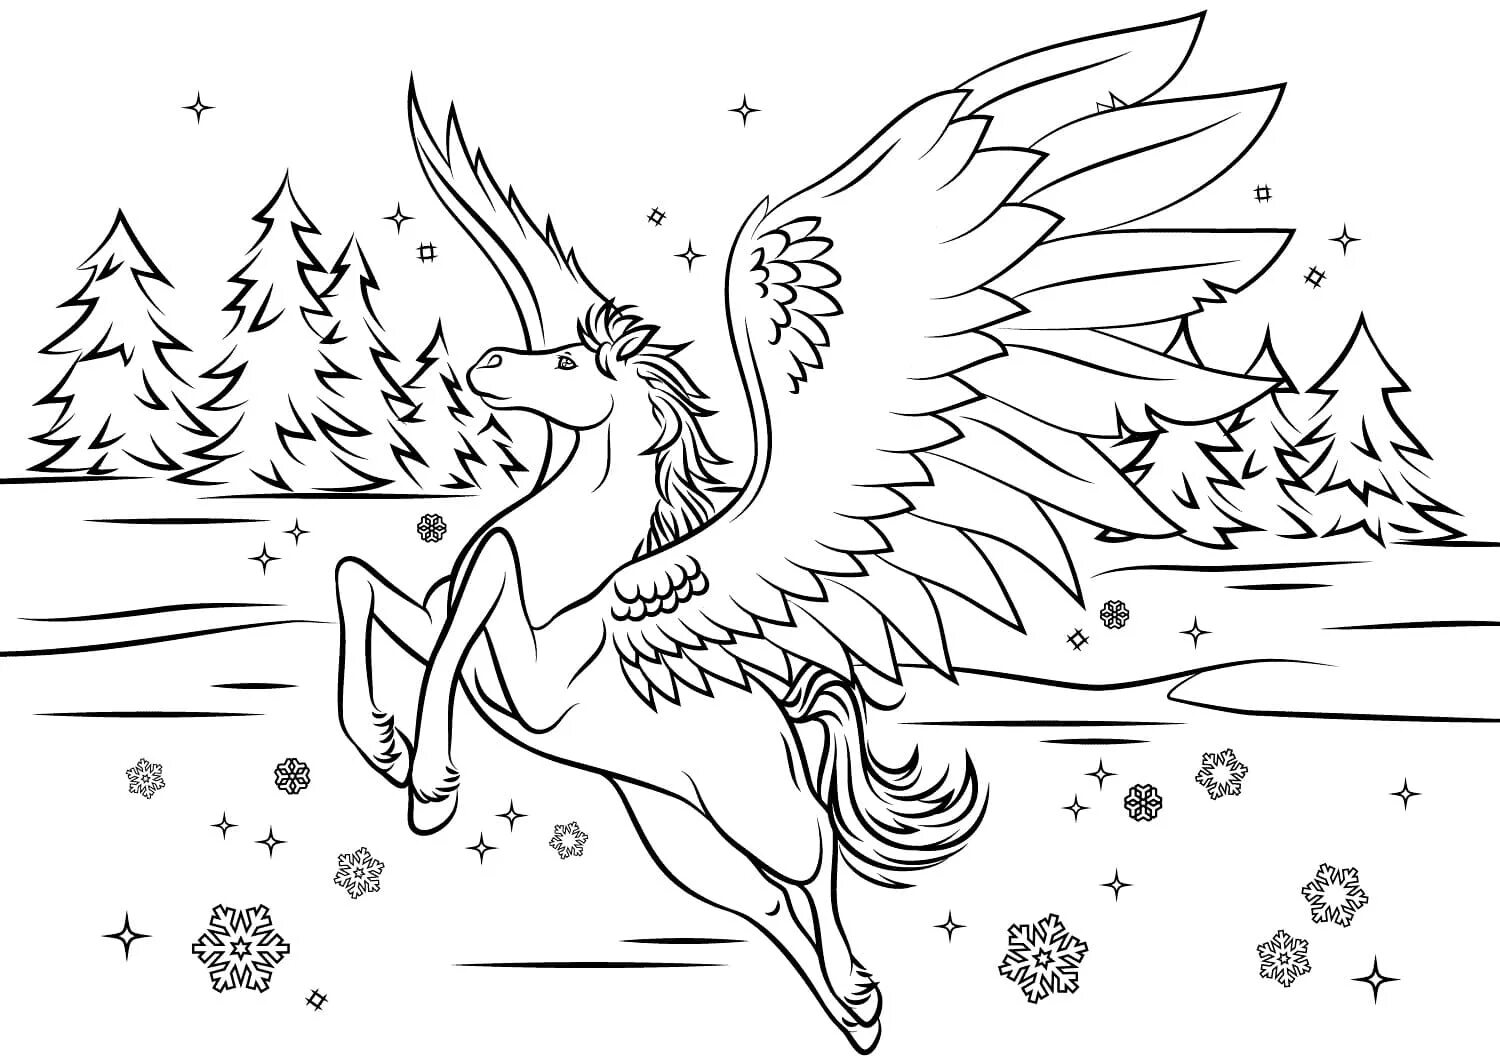 Pegasus for kids #7